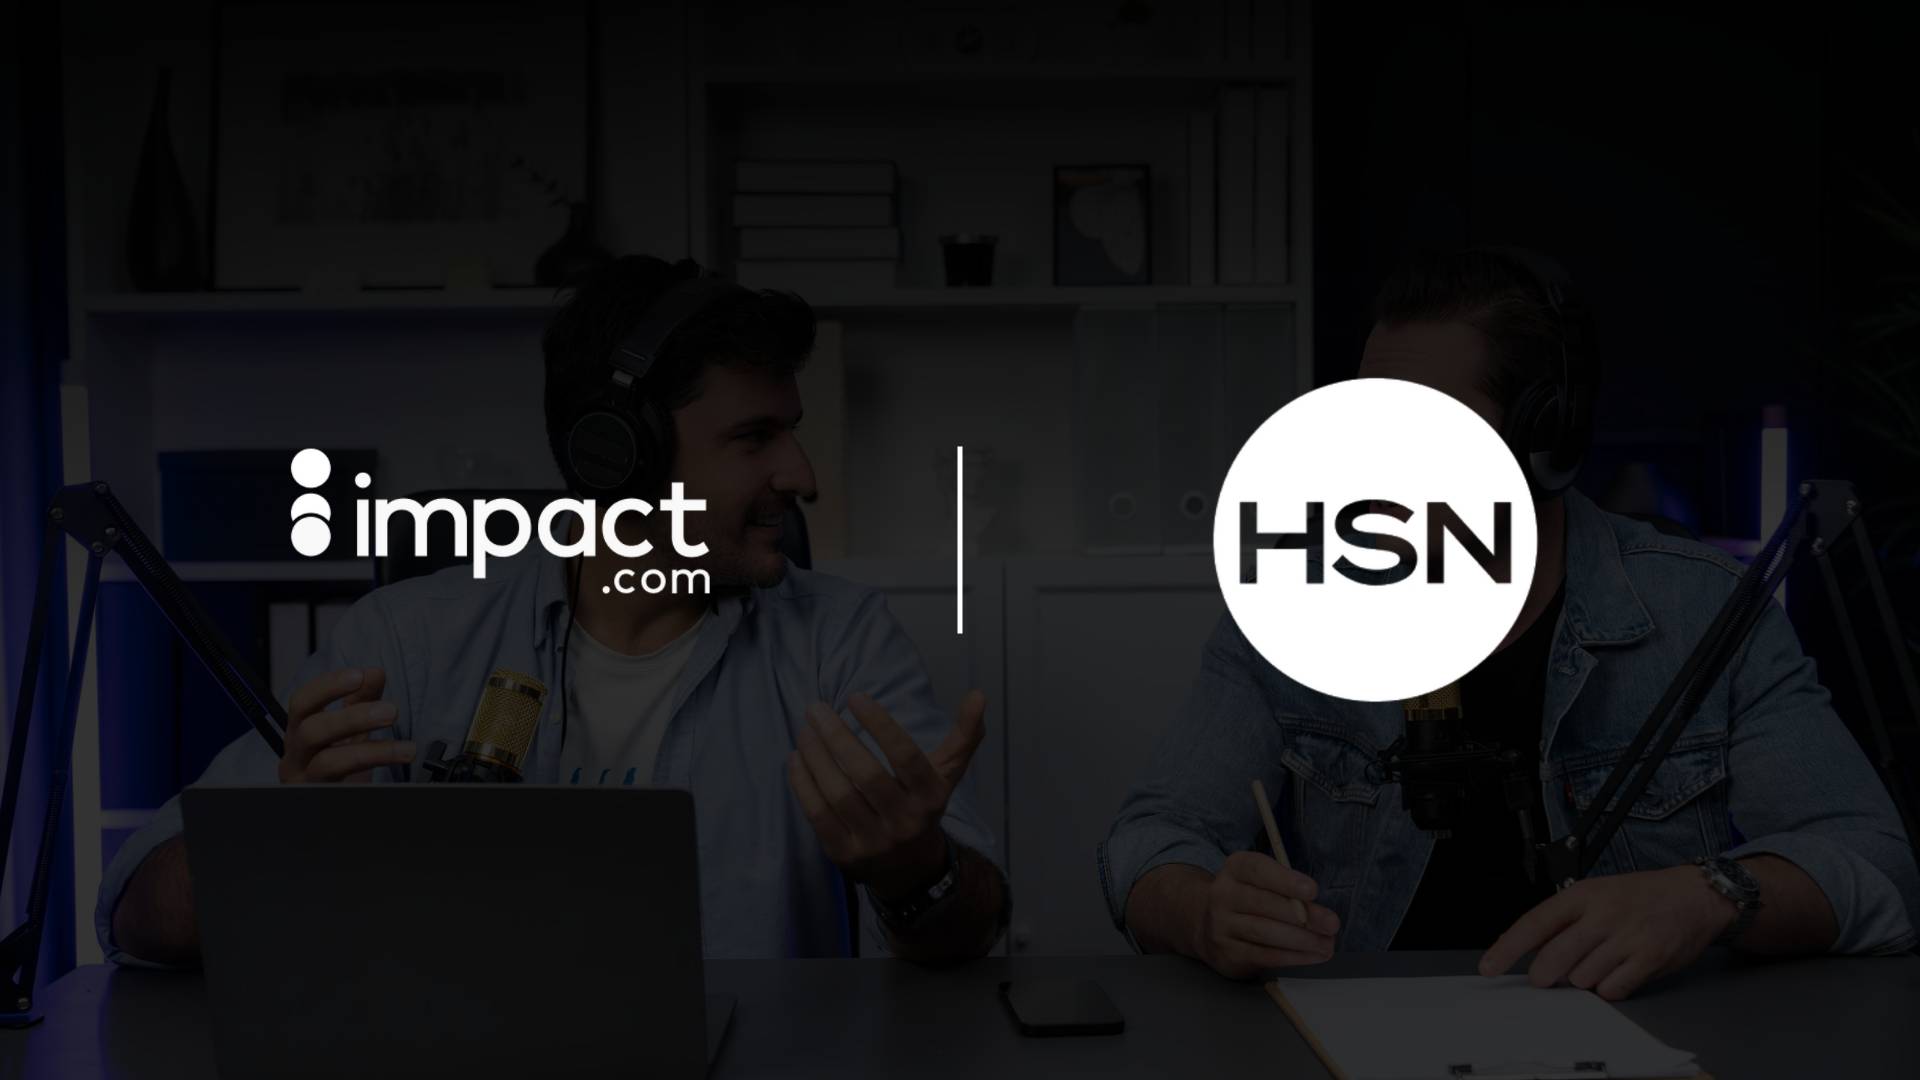 HSN and impact.com Launch HSNfluencer: A New Creator Platform for Enhanced Engagement